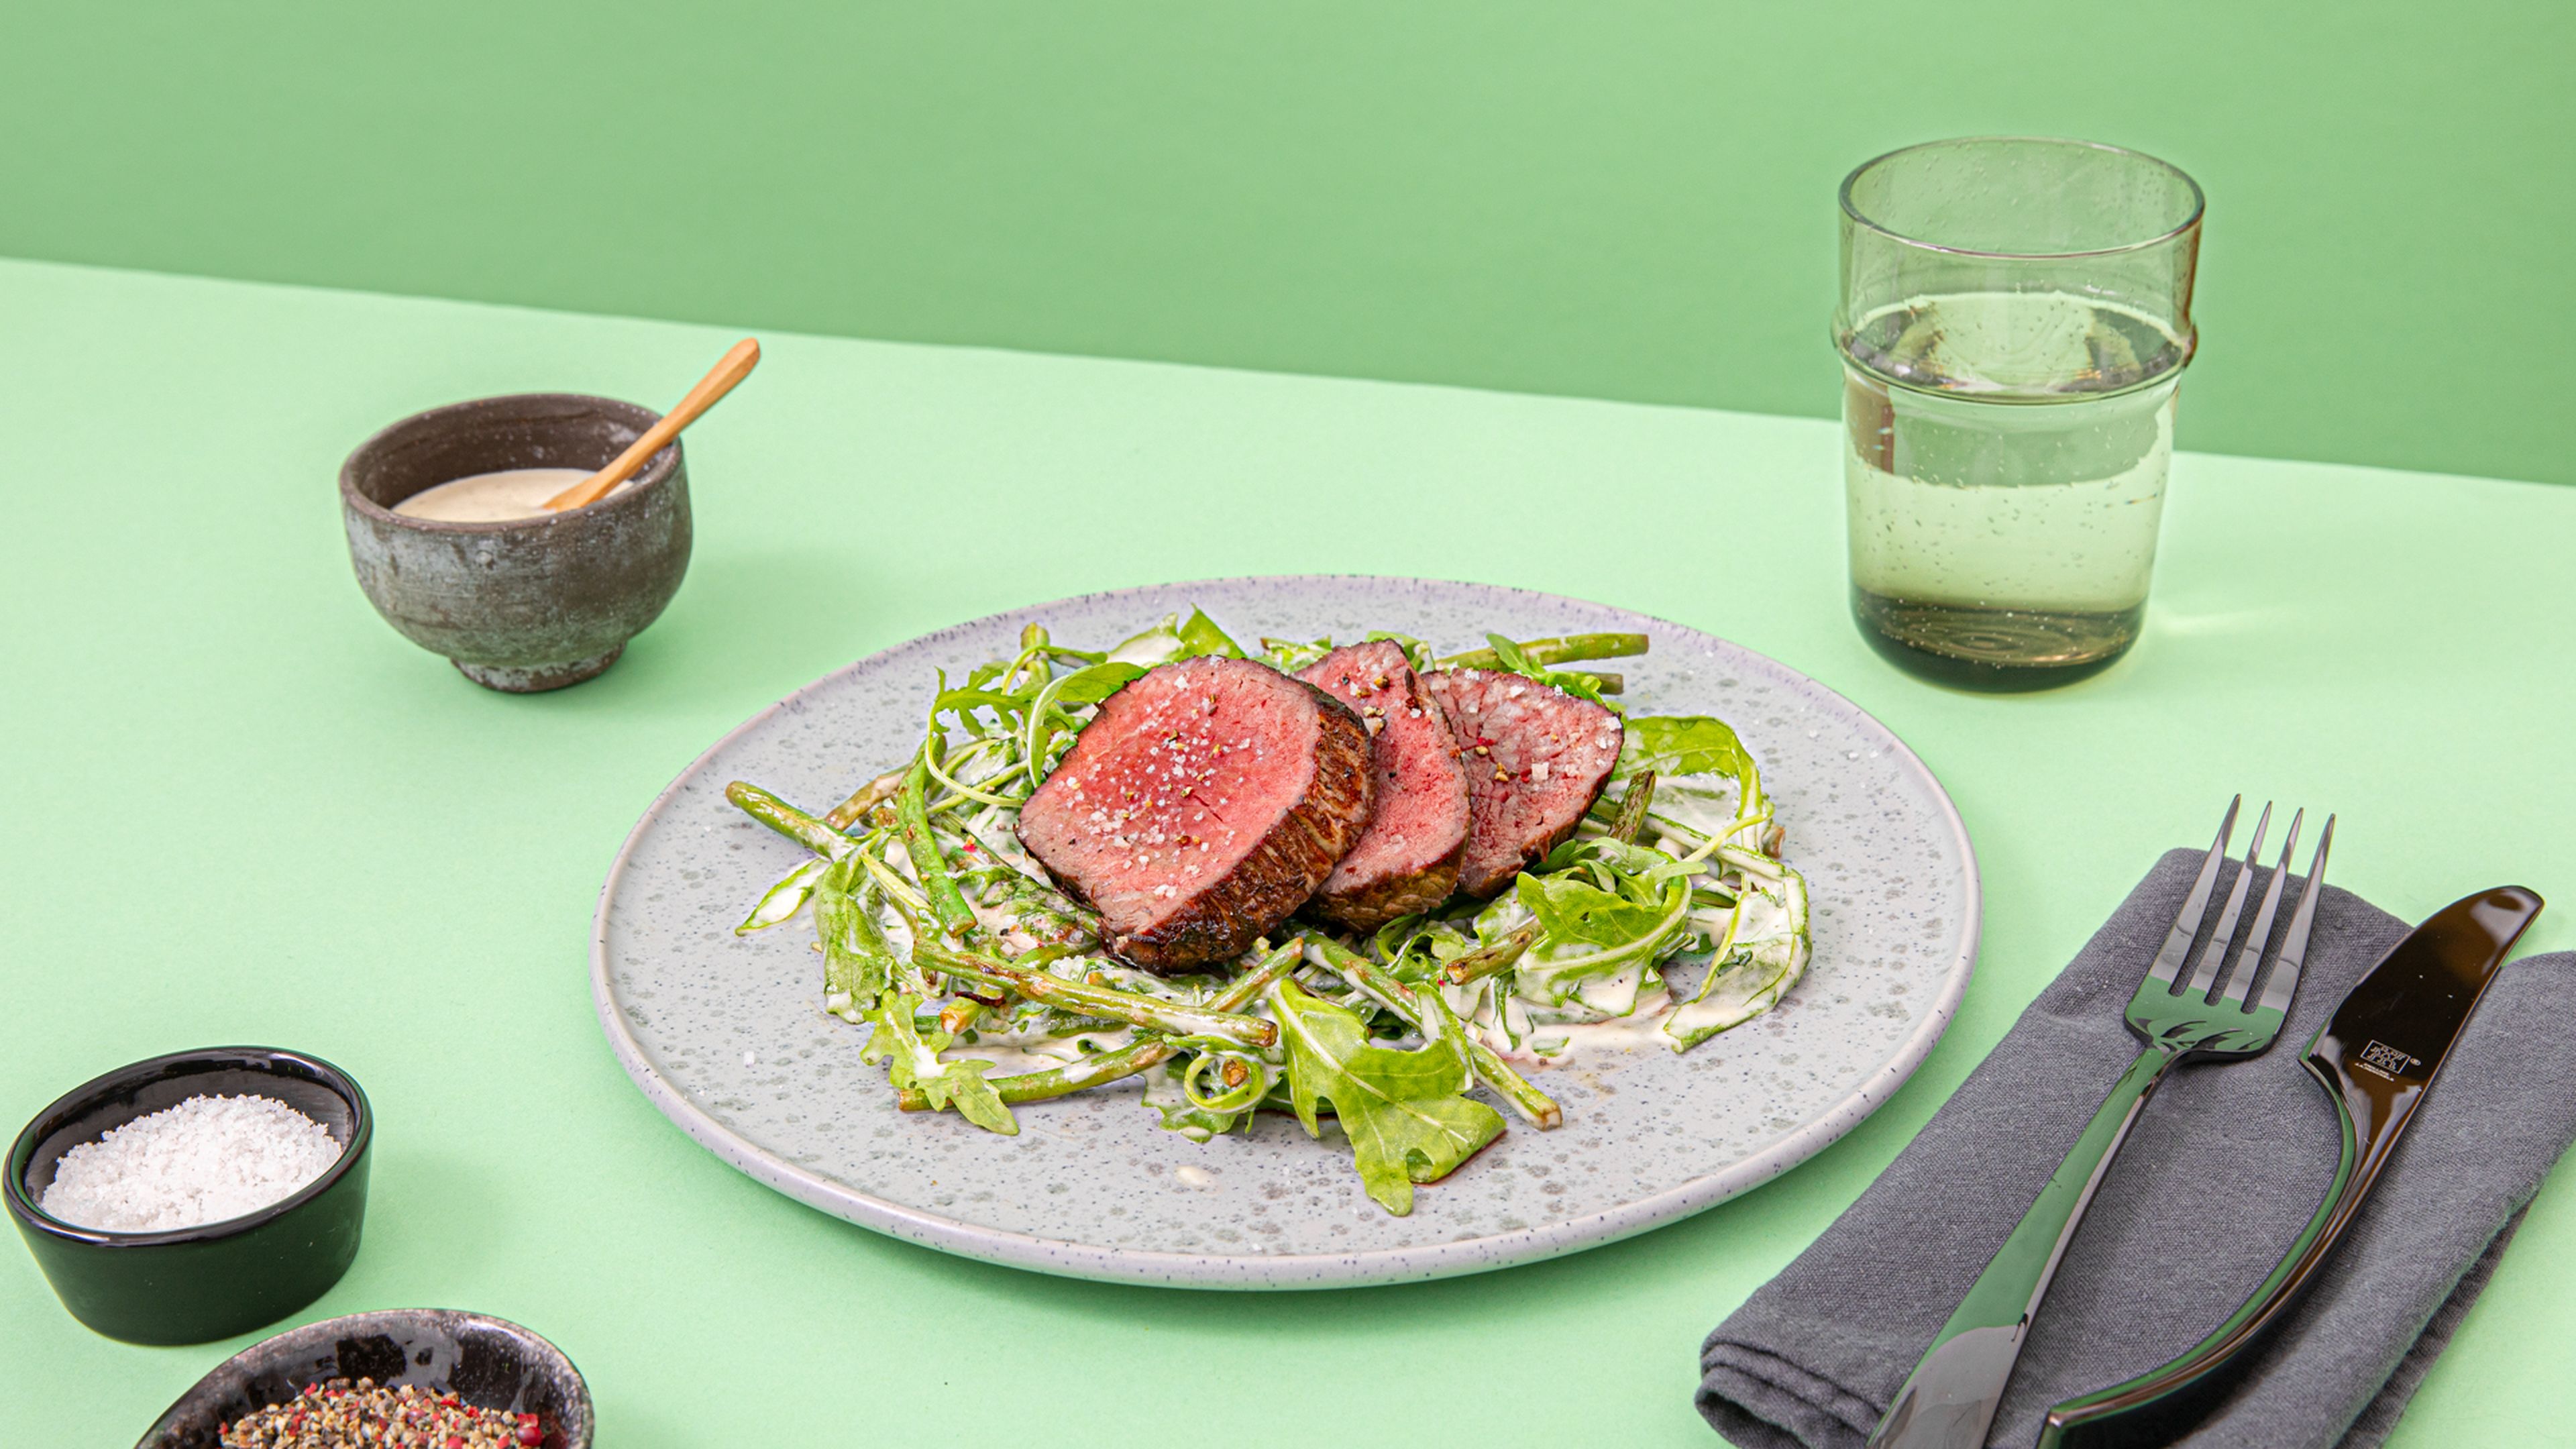 Steak and arugula salad with Parmesan dressing